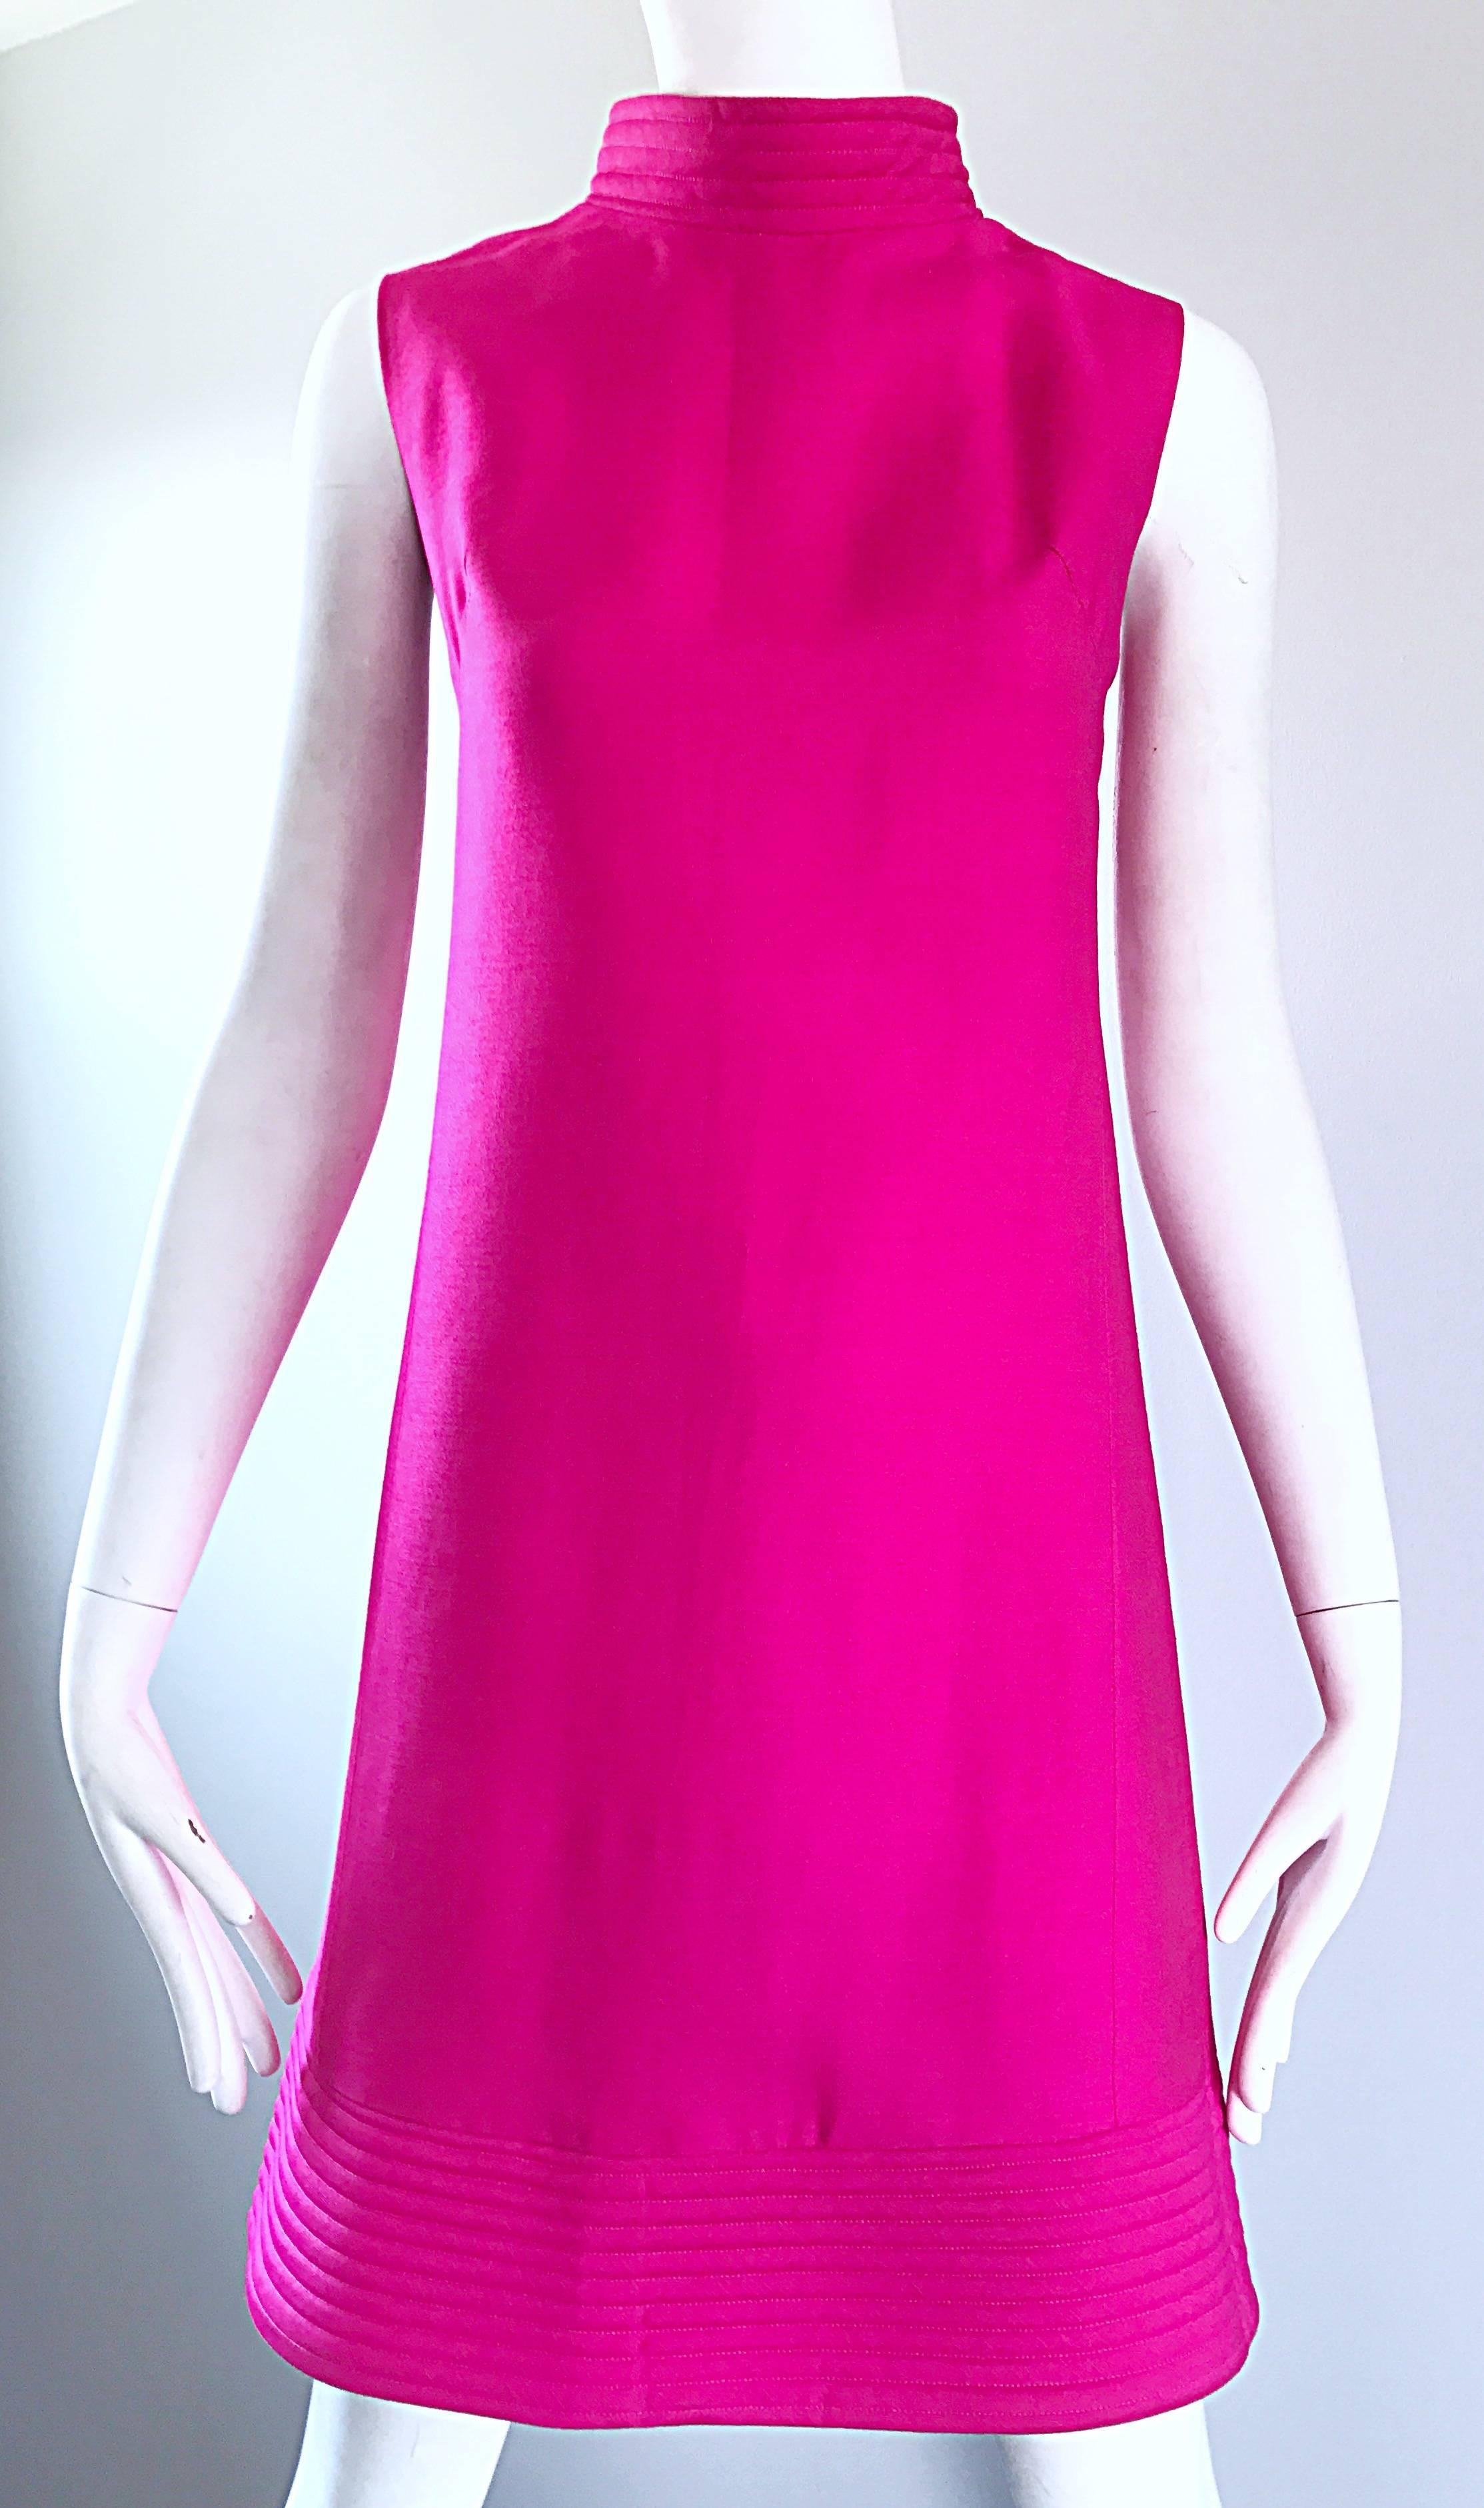 Chic 1960s Shocking Hot Pink Sleeveless Fuchsia Vintage High Neck Shift Dress 1